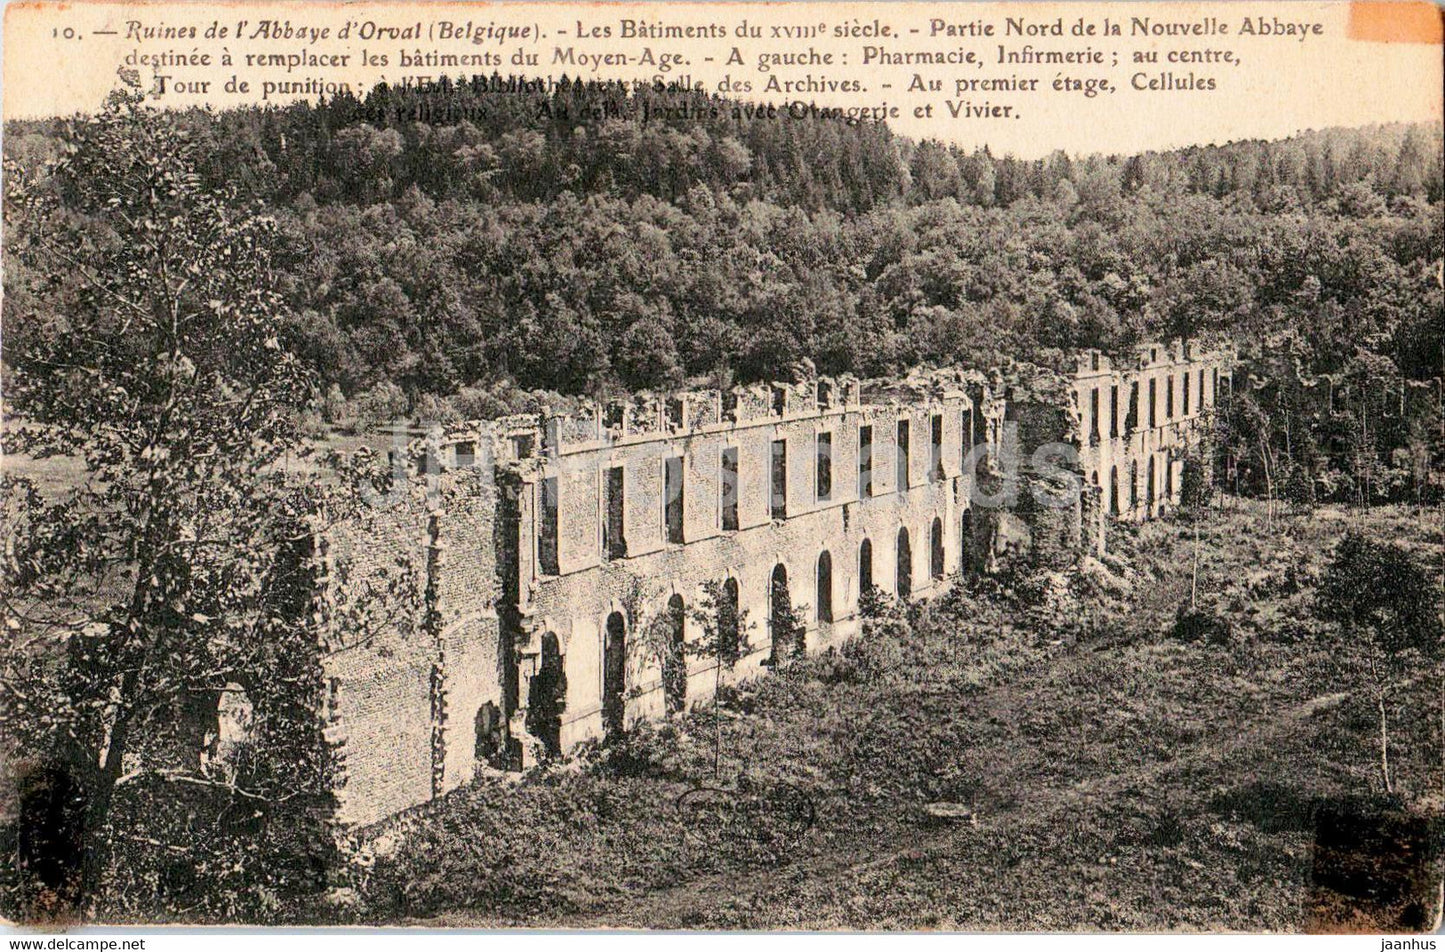 Ruines de l'Abbaye d'Orval - old postcard - 1909 - Belgium - used - JH Postcards